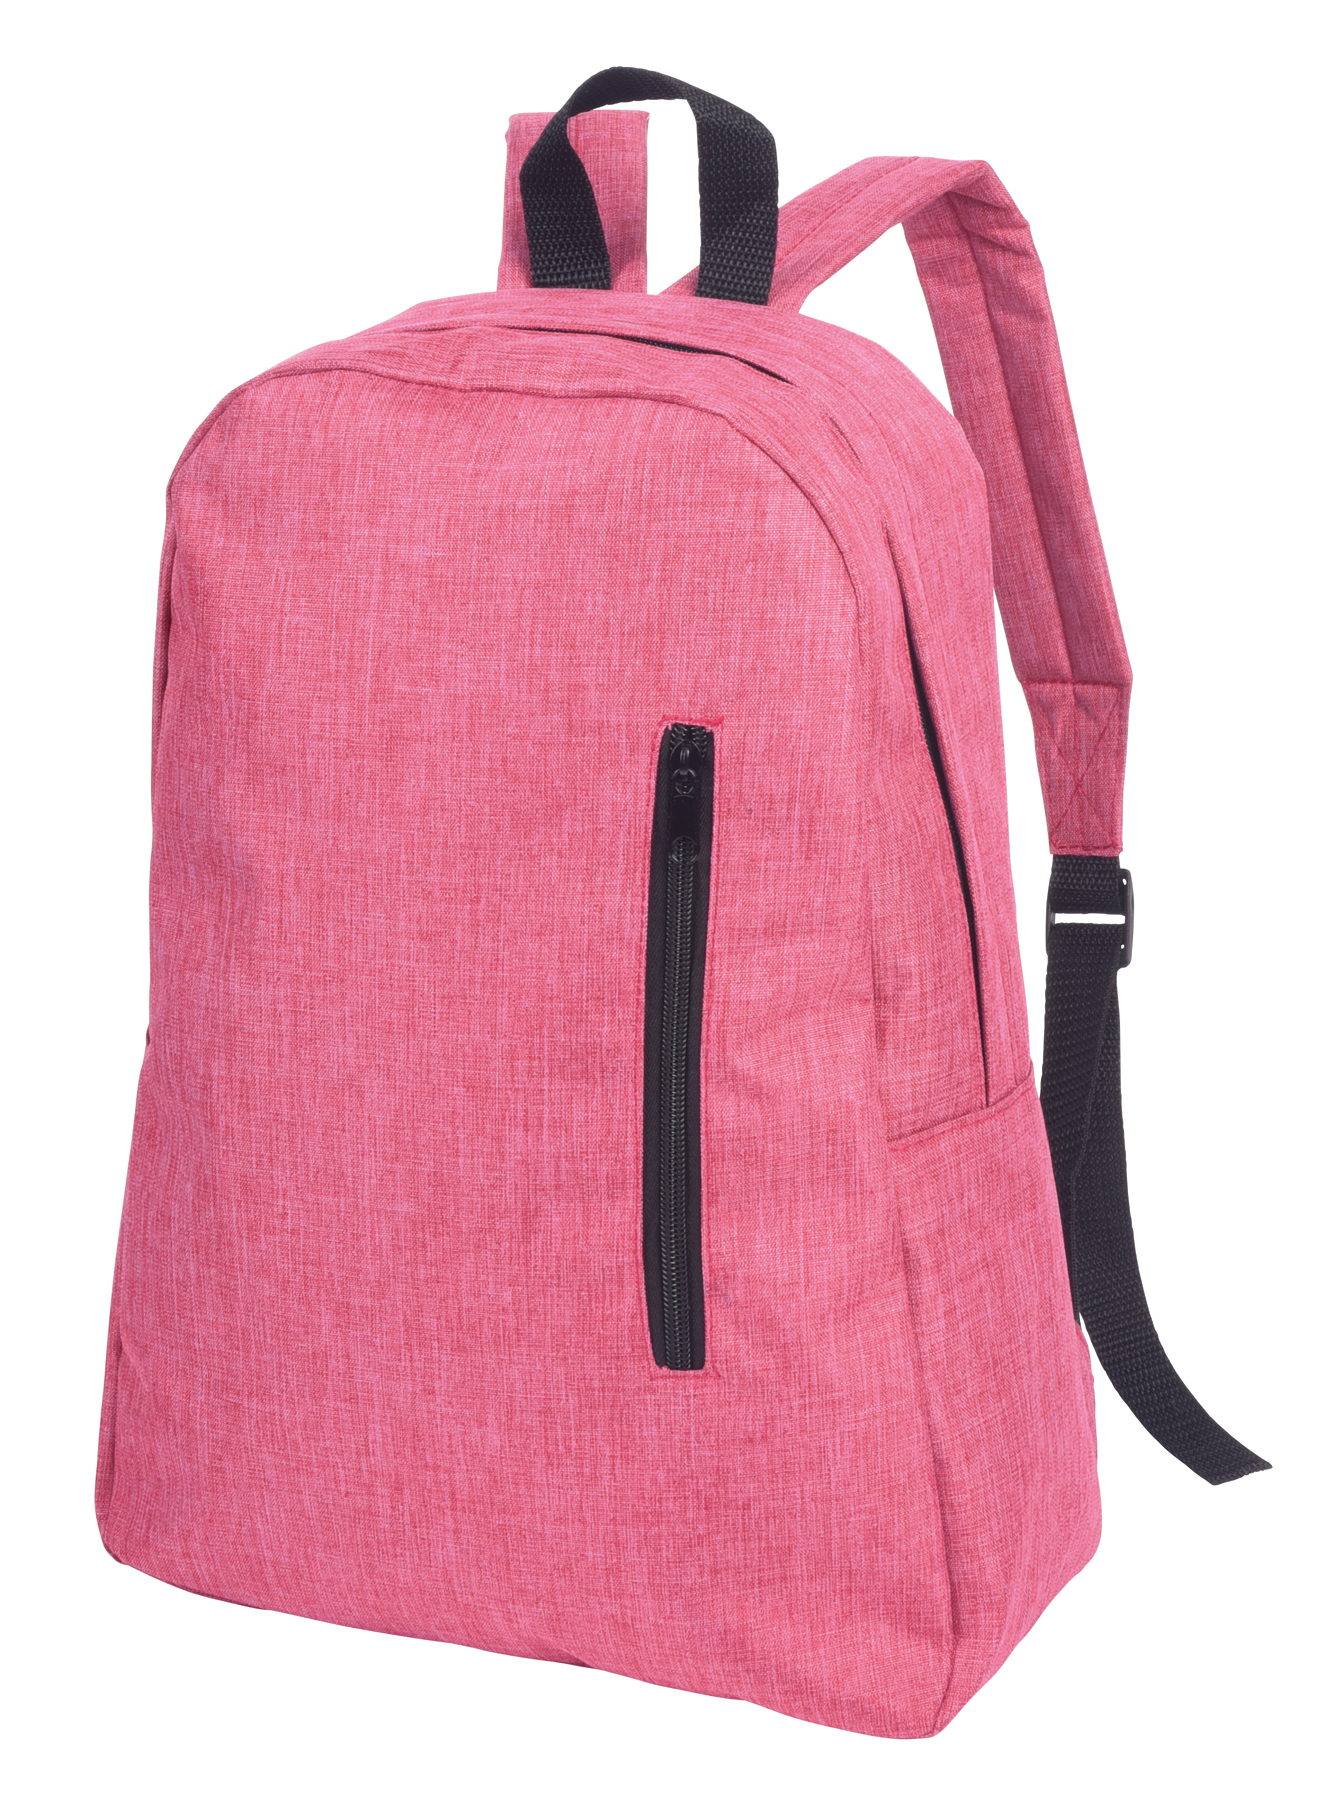 Backpack OSLO - red